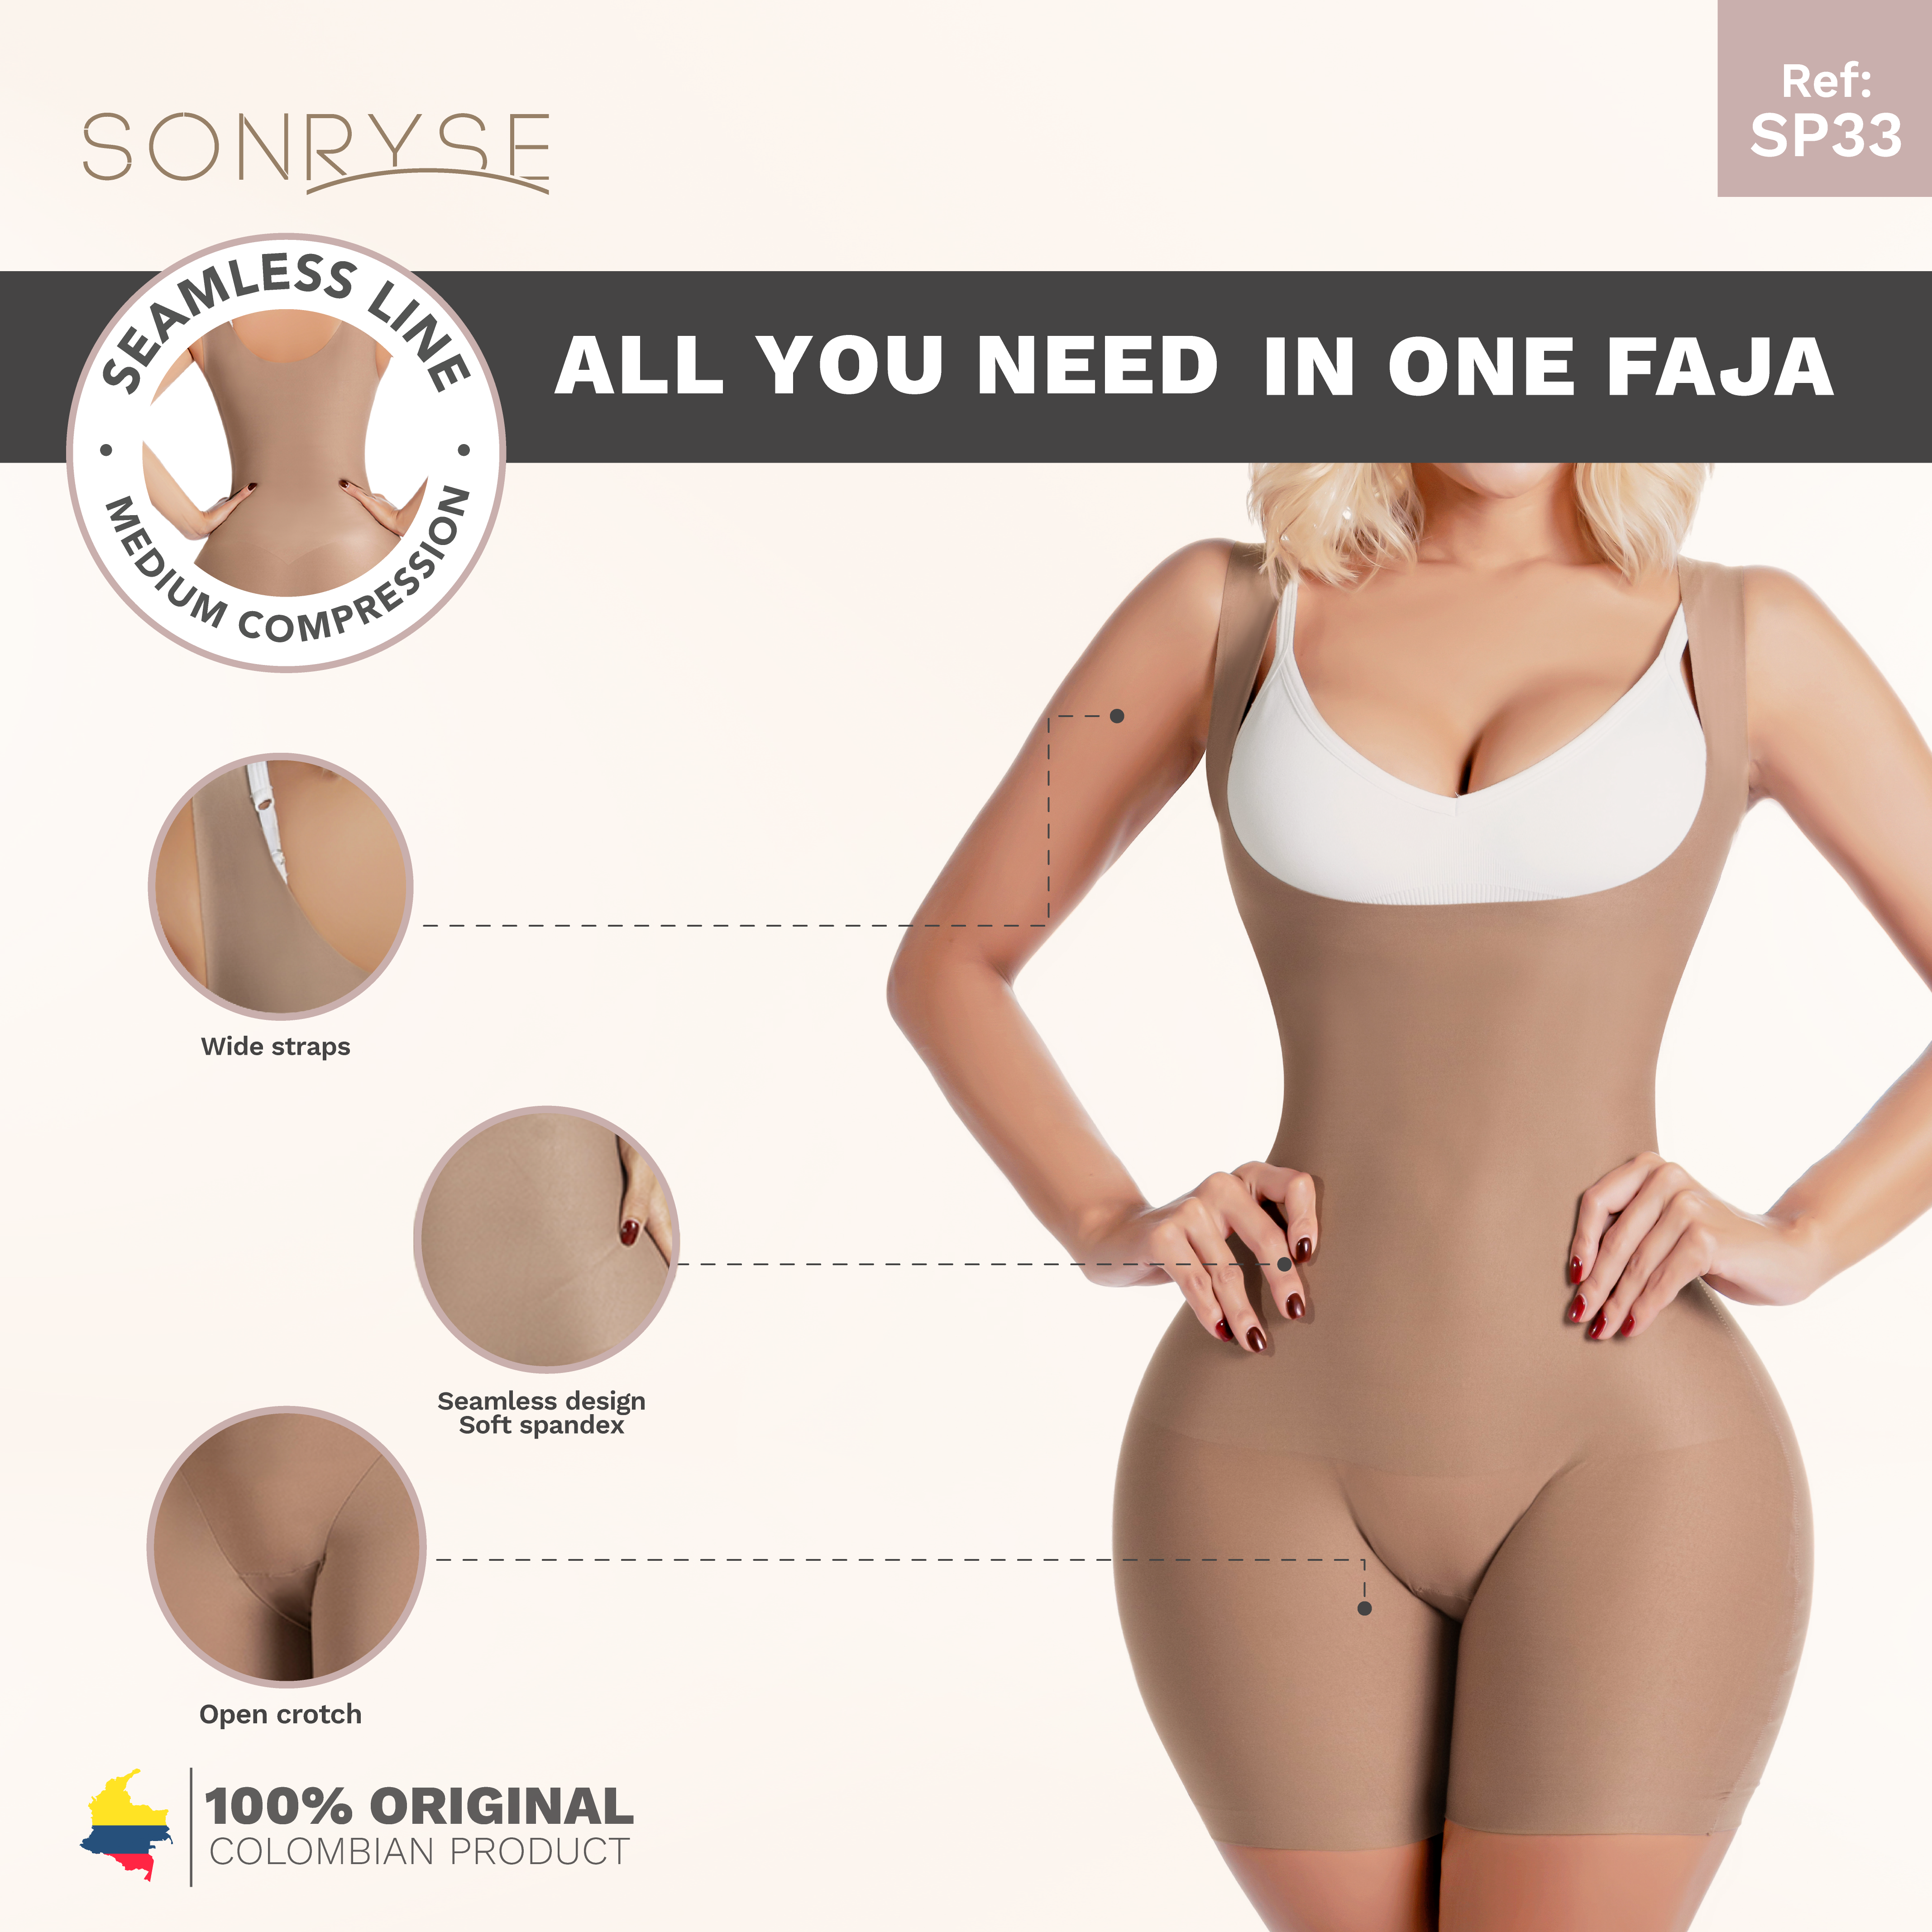 Faja Colombiana Everyday Use Bodysuit Shapewear for Women Sonryse